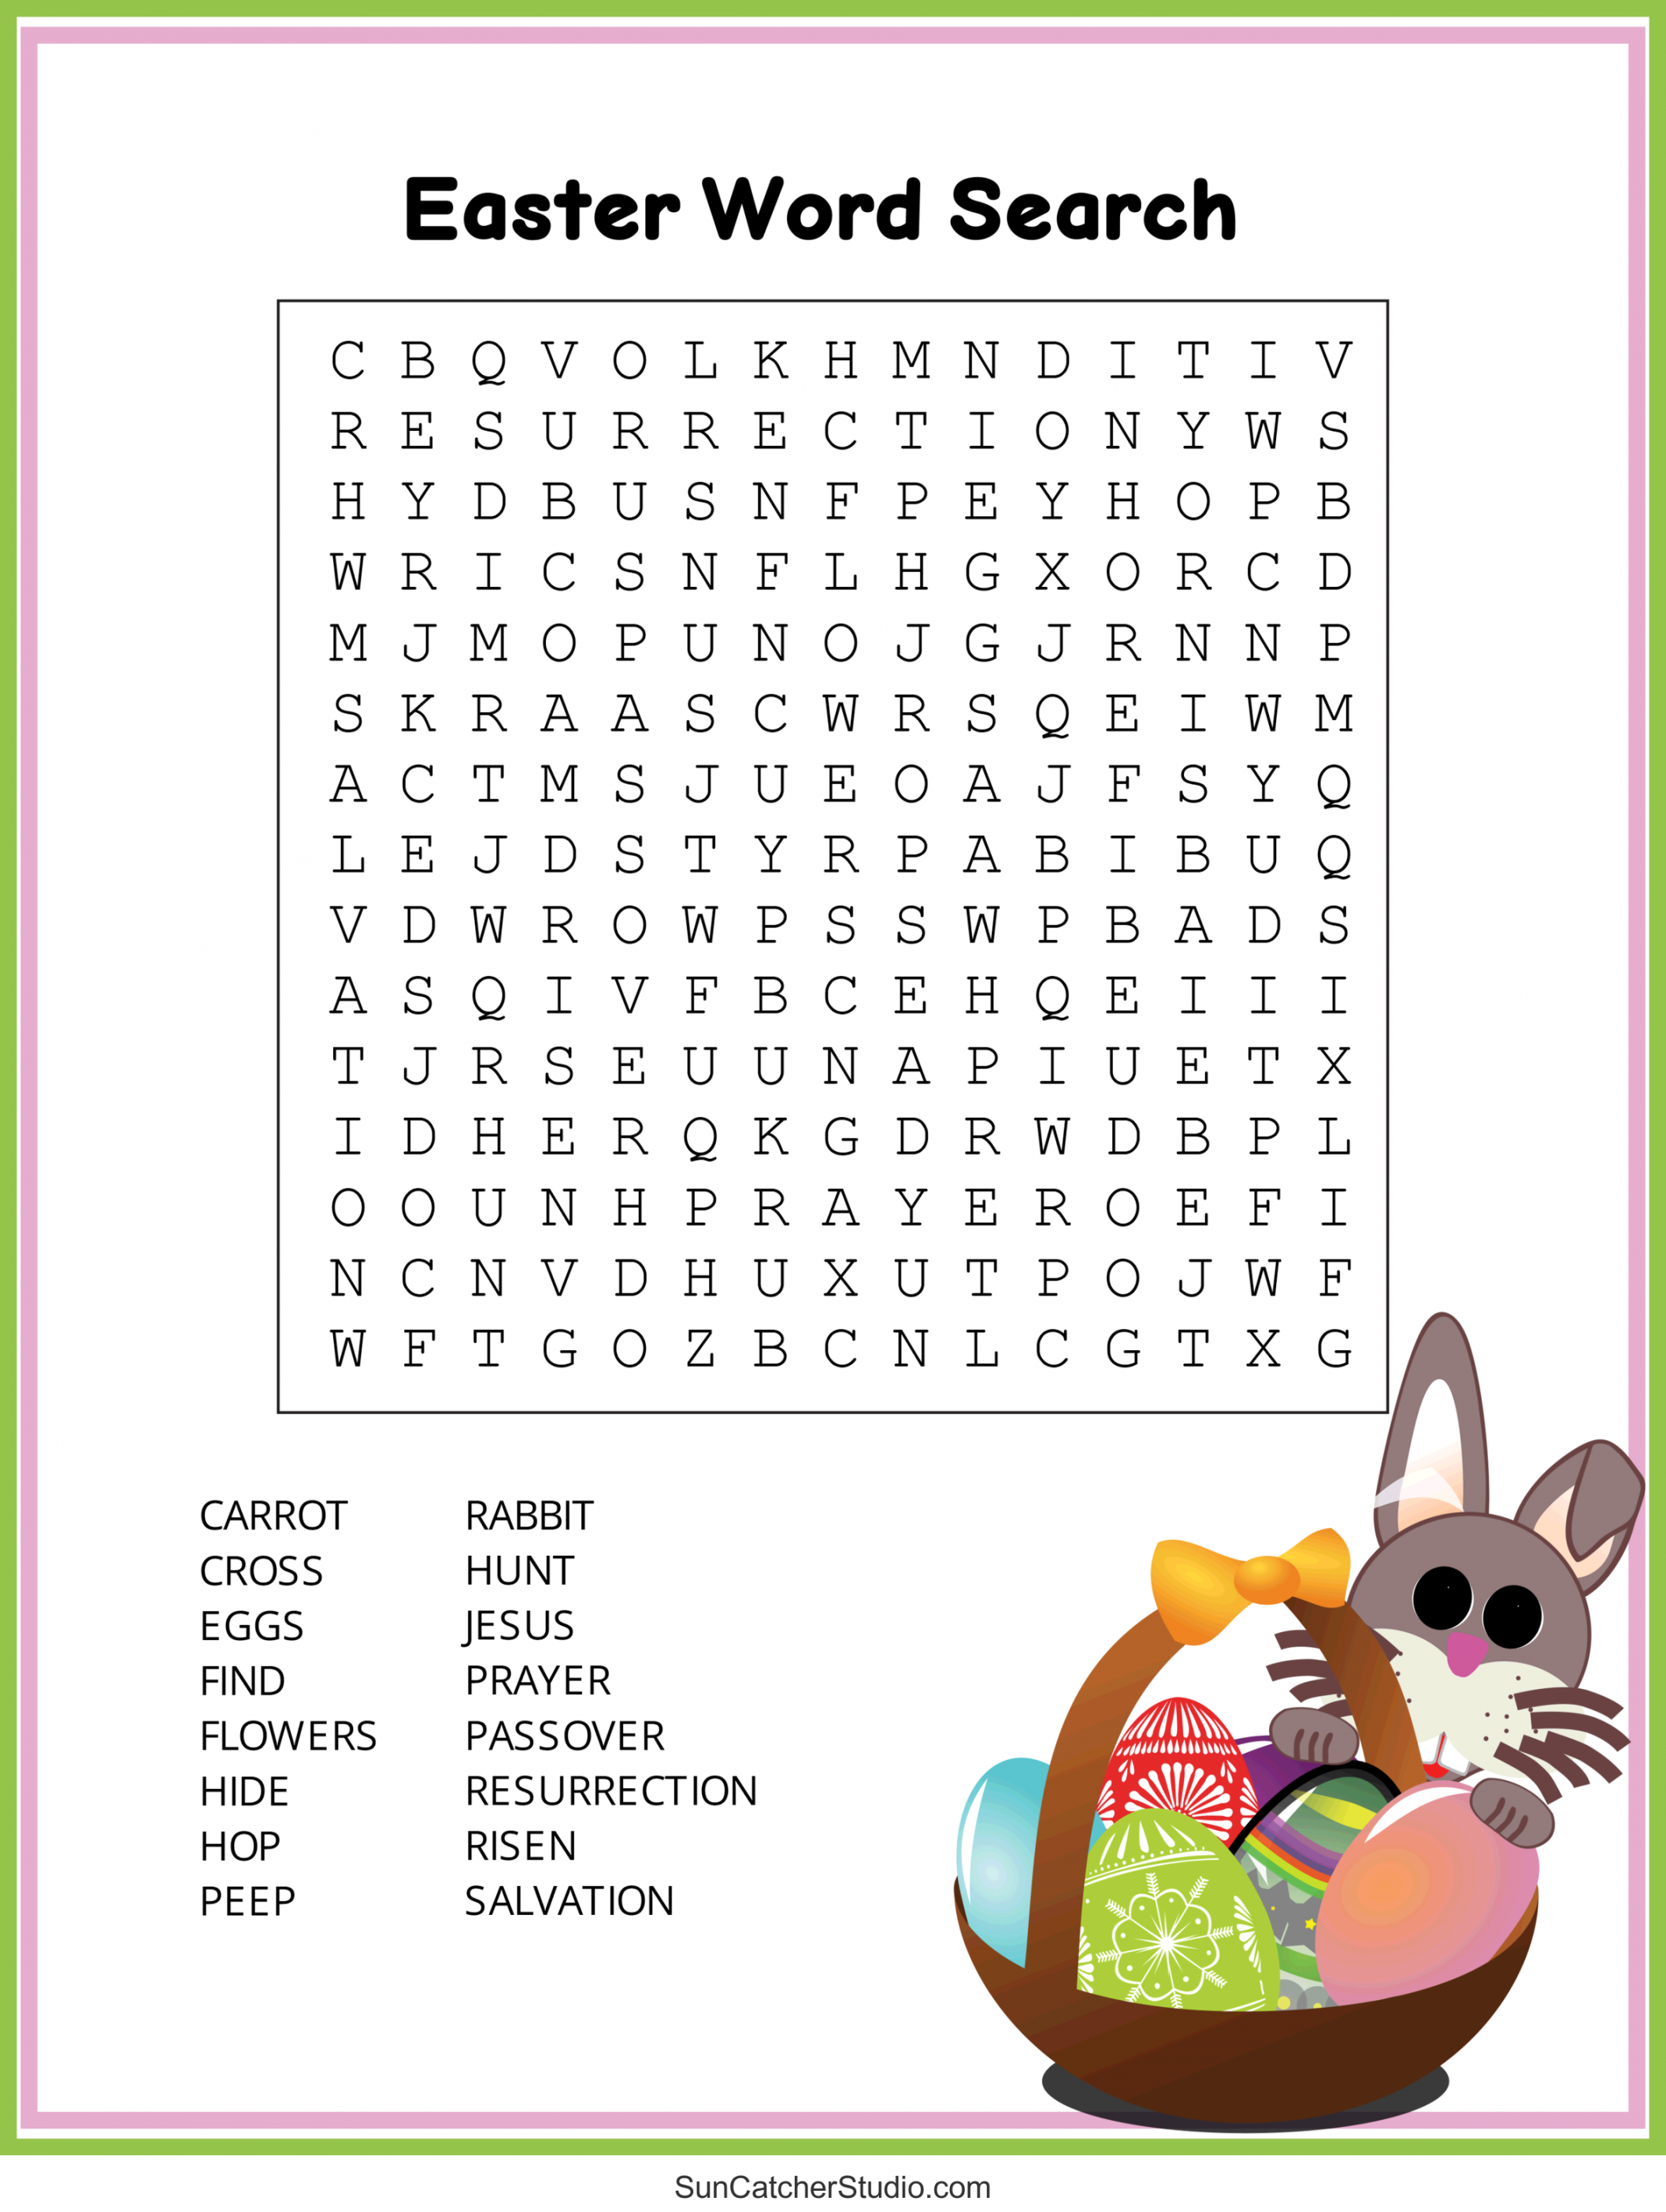 Easter Word Search Free Printable - Printable - Easter Word Search (Free Printable PDF Puzzles) – DIY Projects